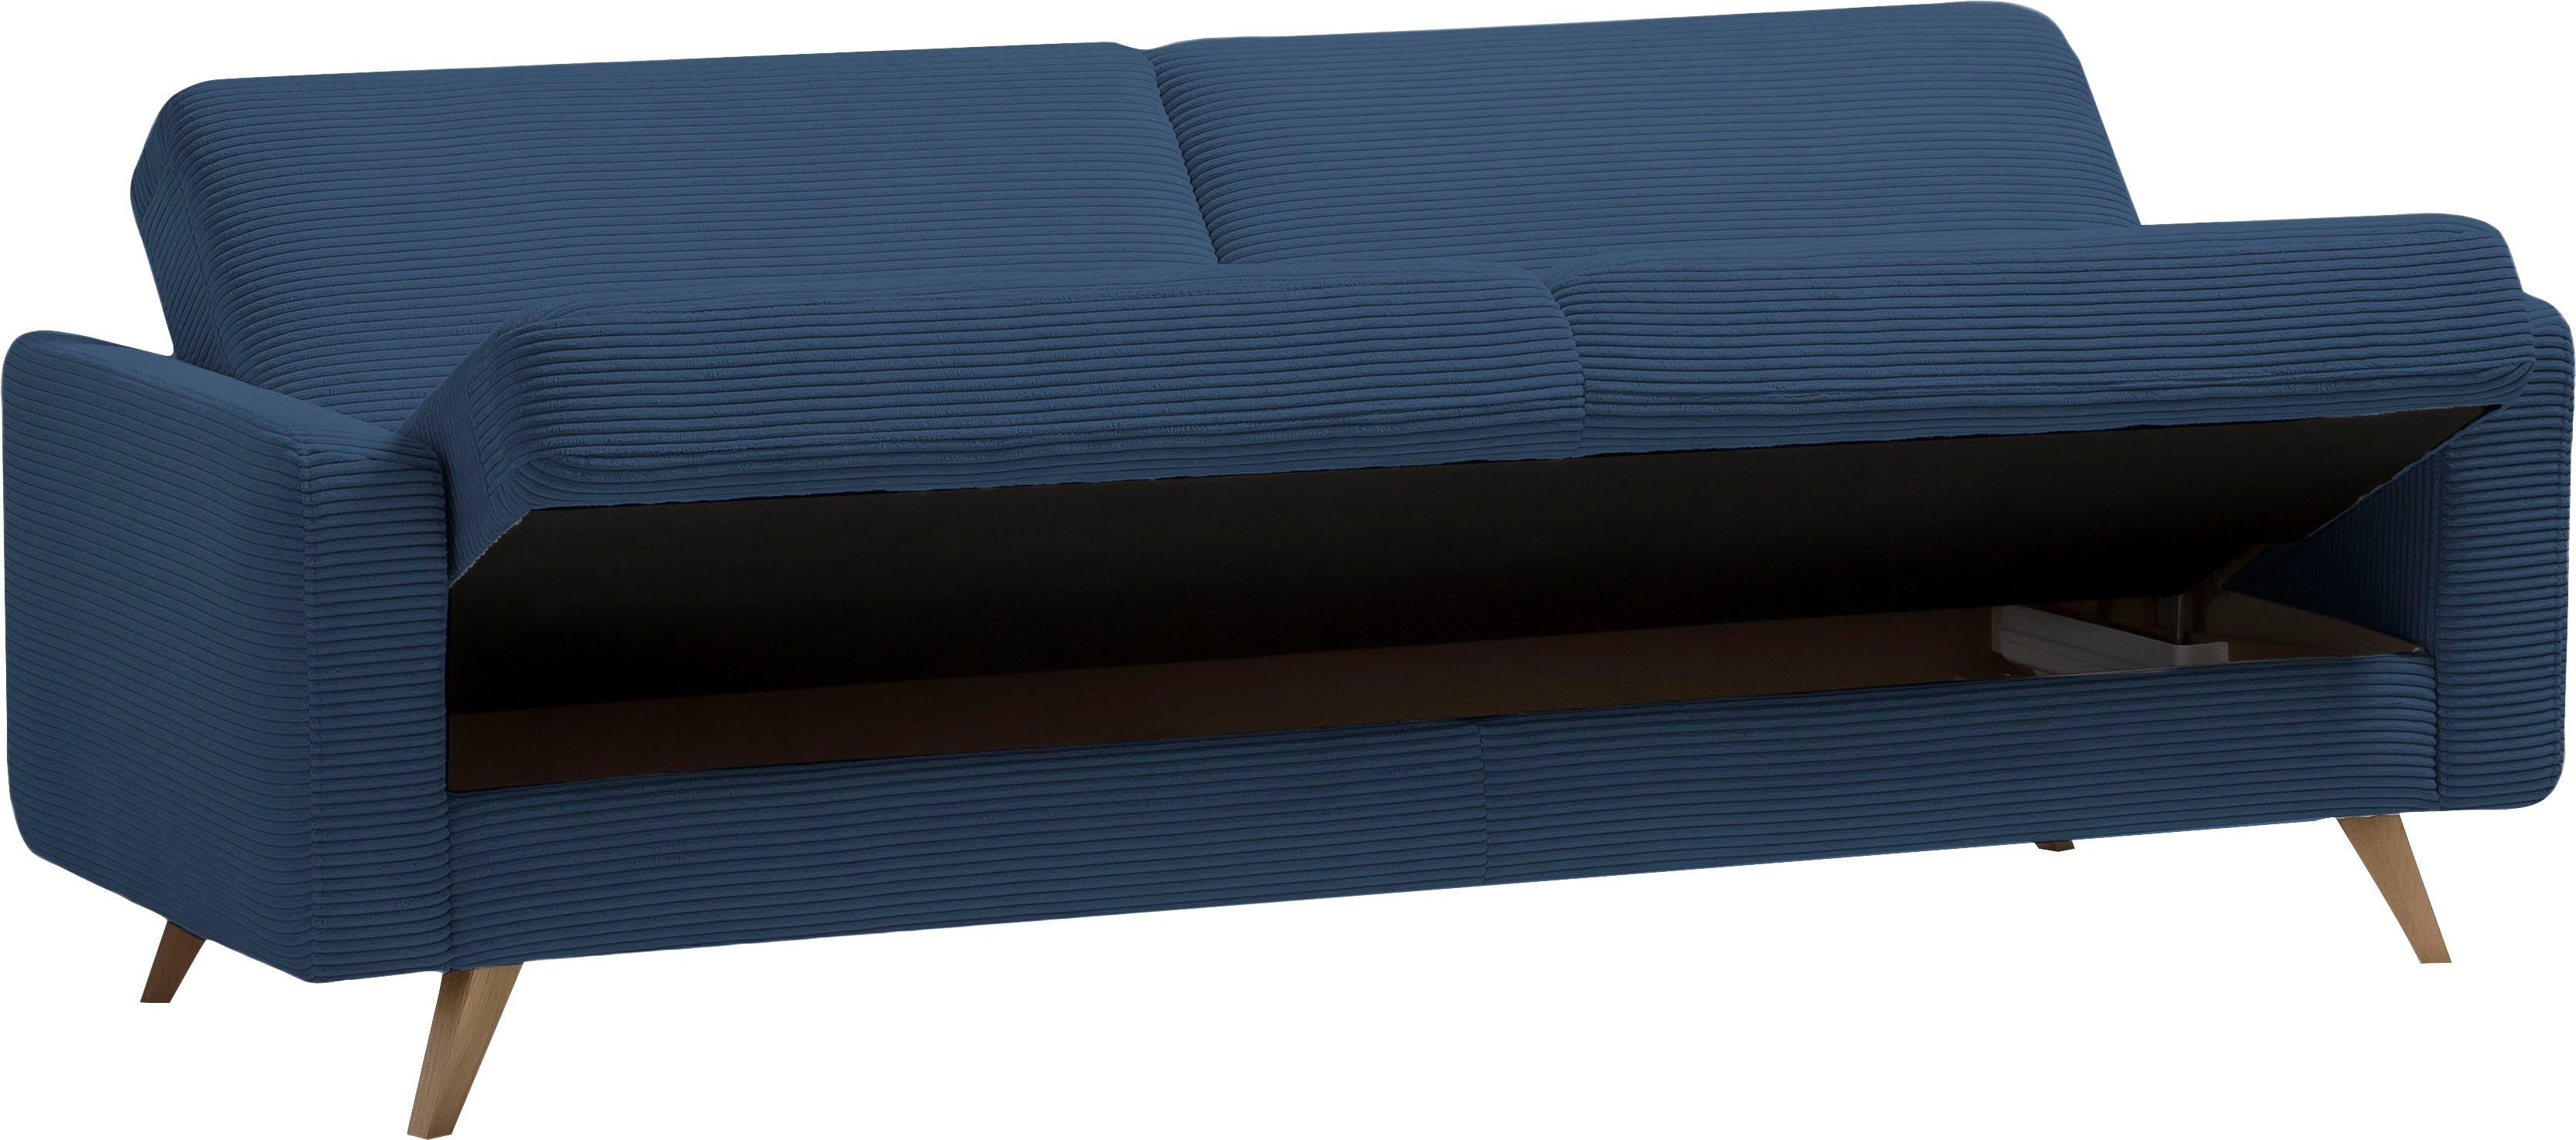 exxpo - 3-Sitzer fashion Samso, Inklusive Bettkasten und sofa Bettfunktion navy